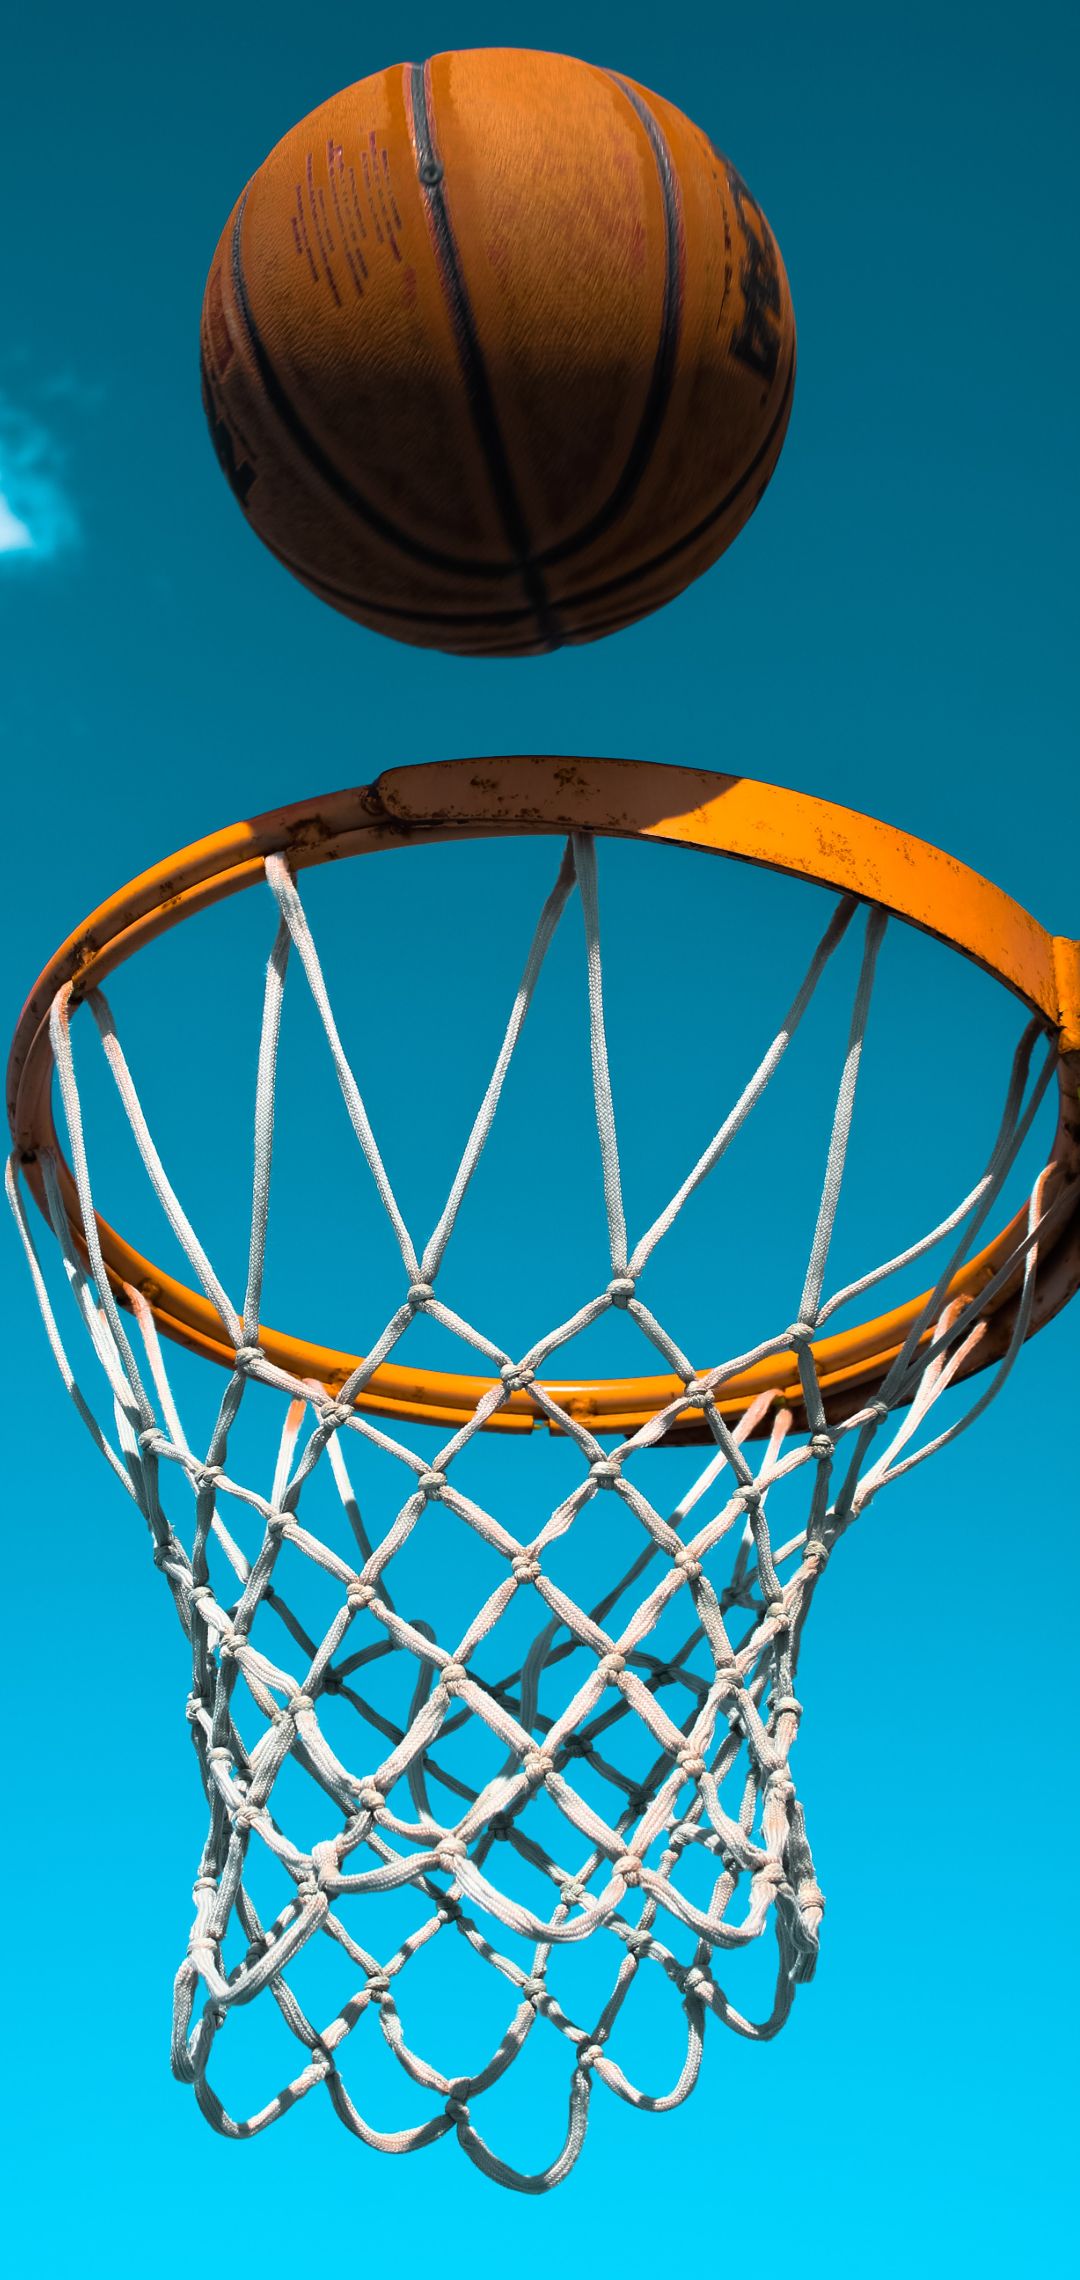  Basketball Hintergrundbild 1080x2280. Basketball iPhone Wallpaper Basketball iPhone Wallpaper